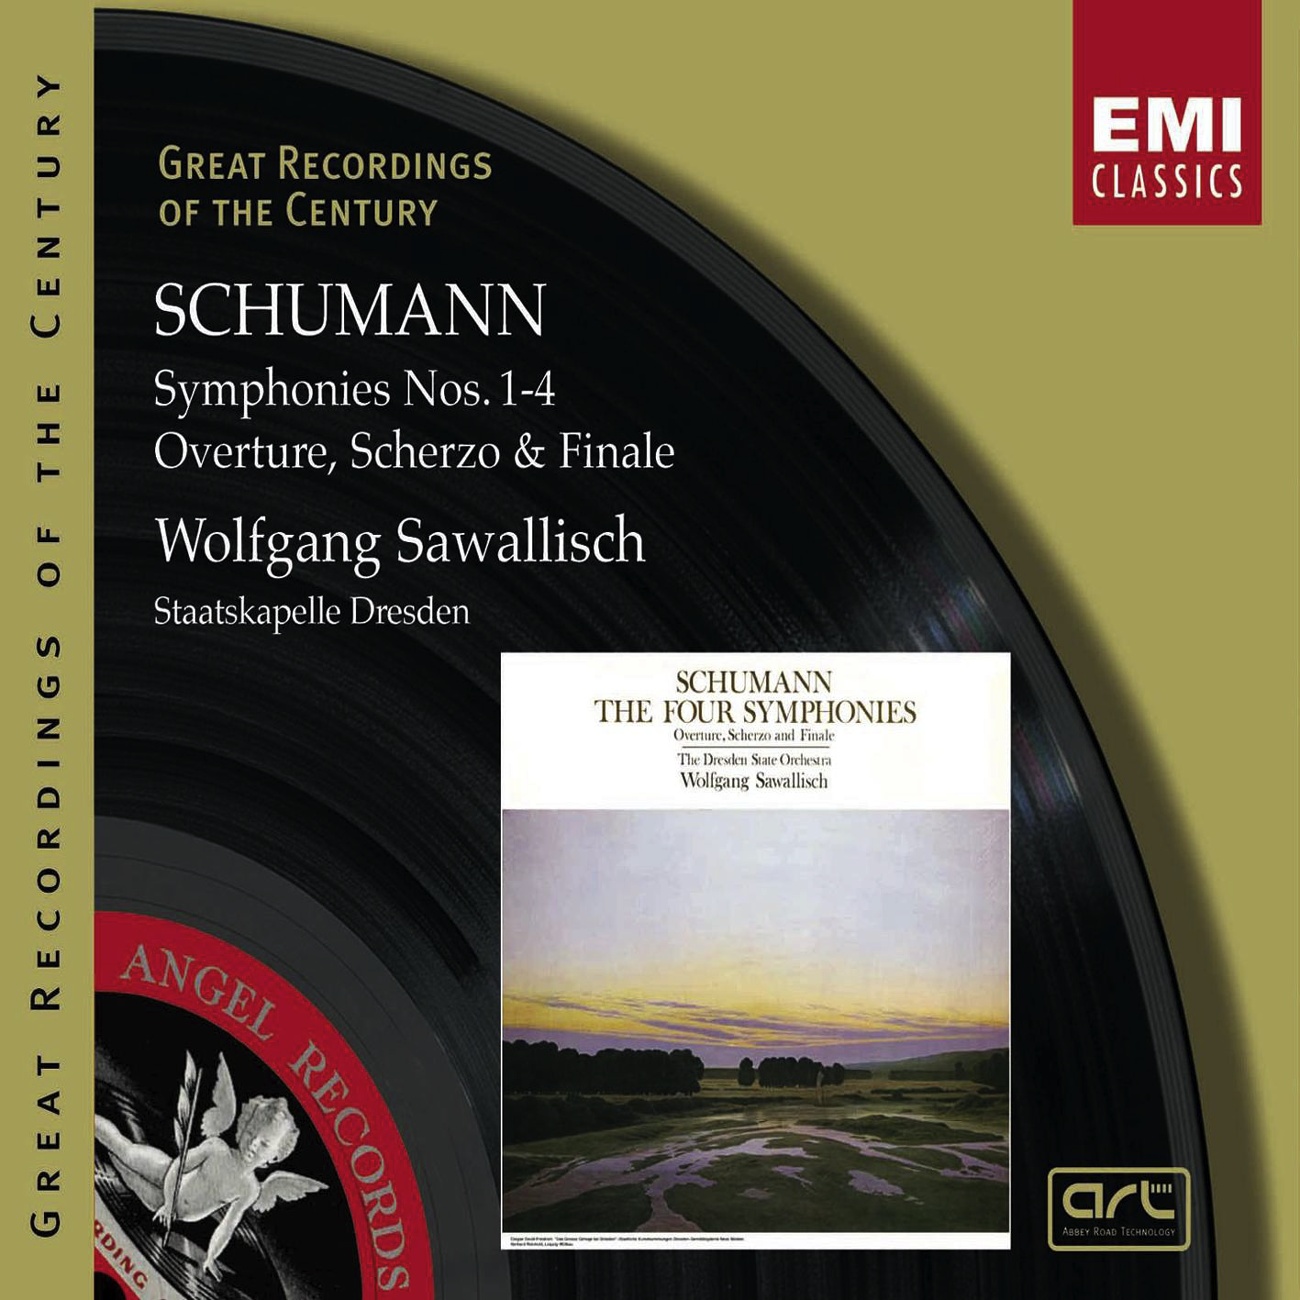 Symphony No. 3 in E flat major Op. 97 Rhenish (2001 Digital Remaster): I.       Lebhaft